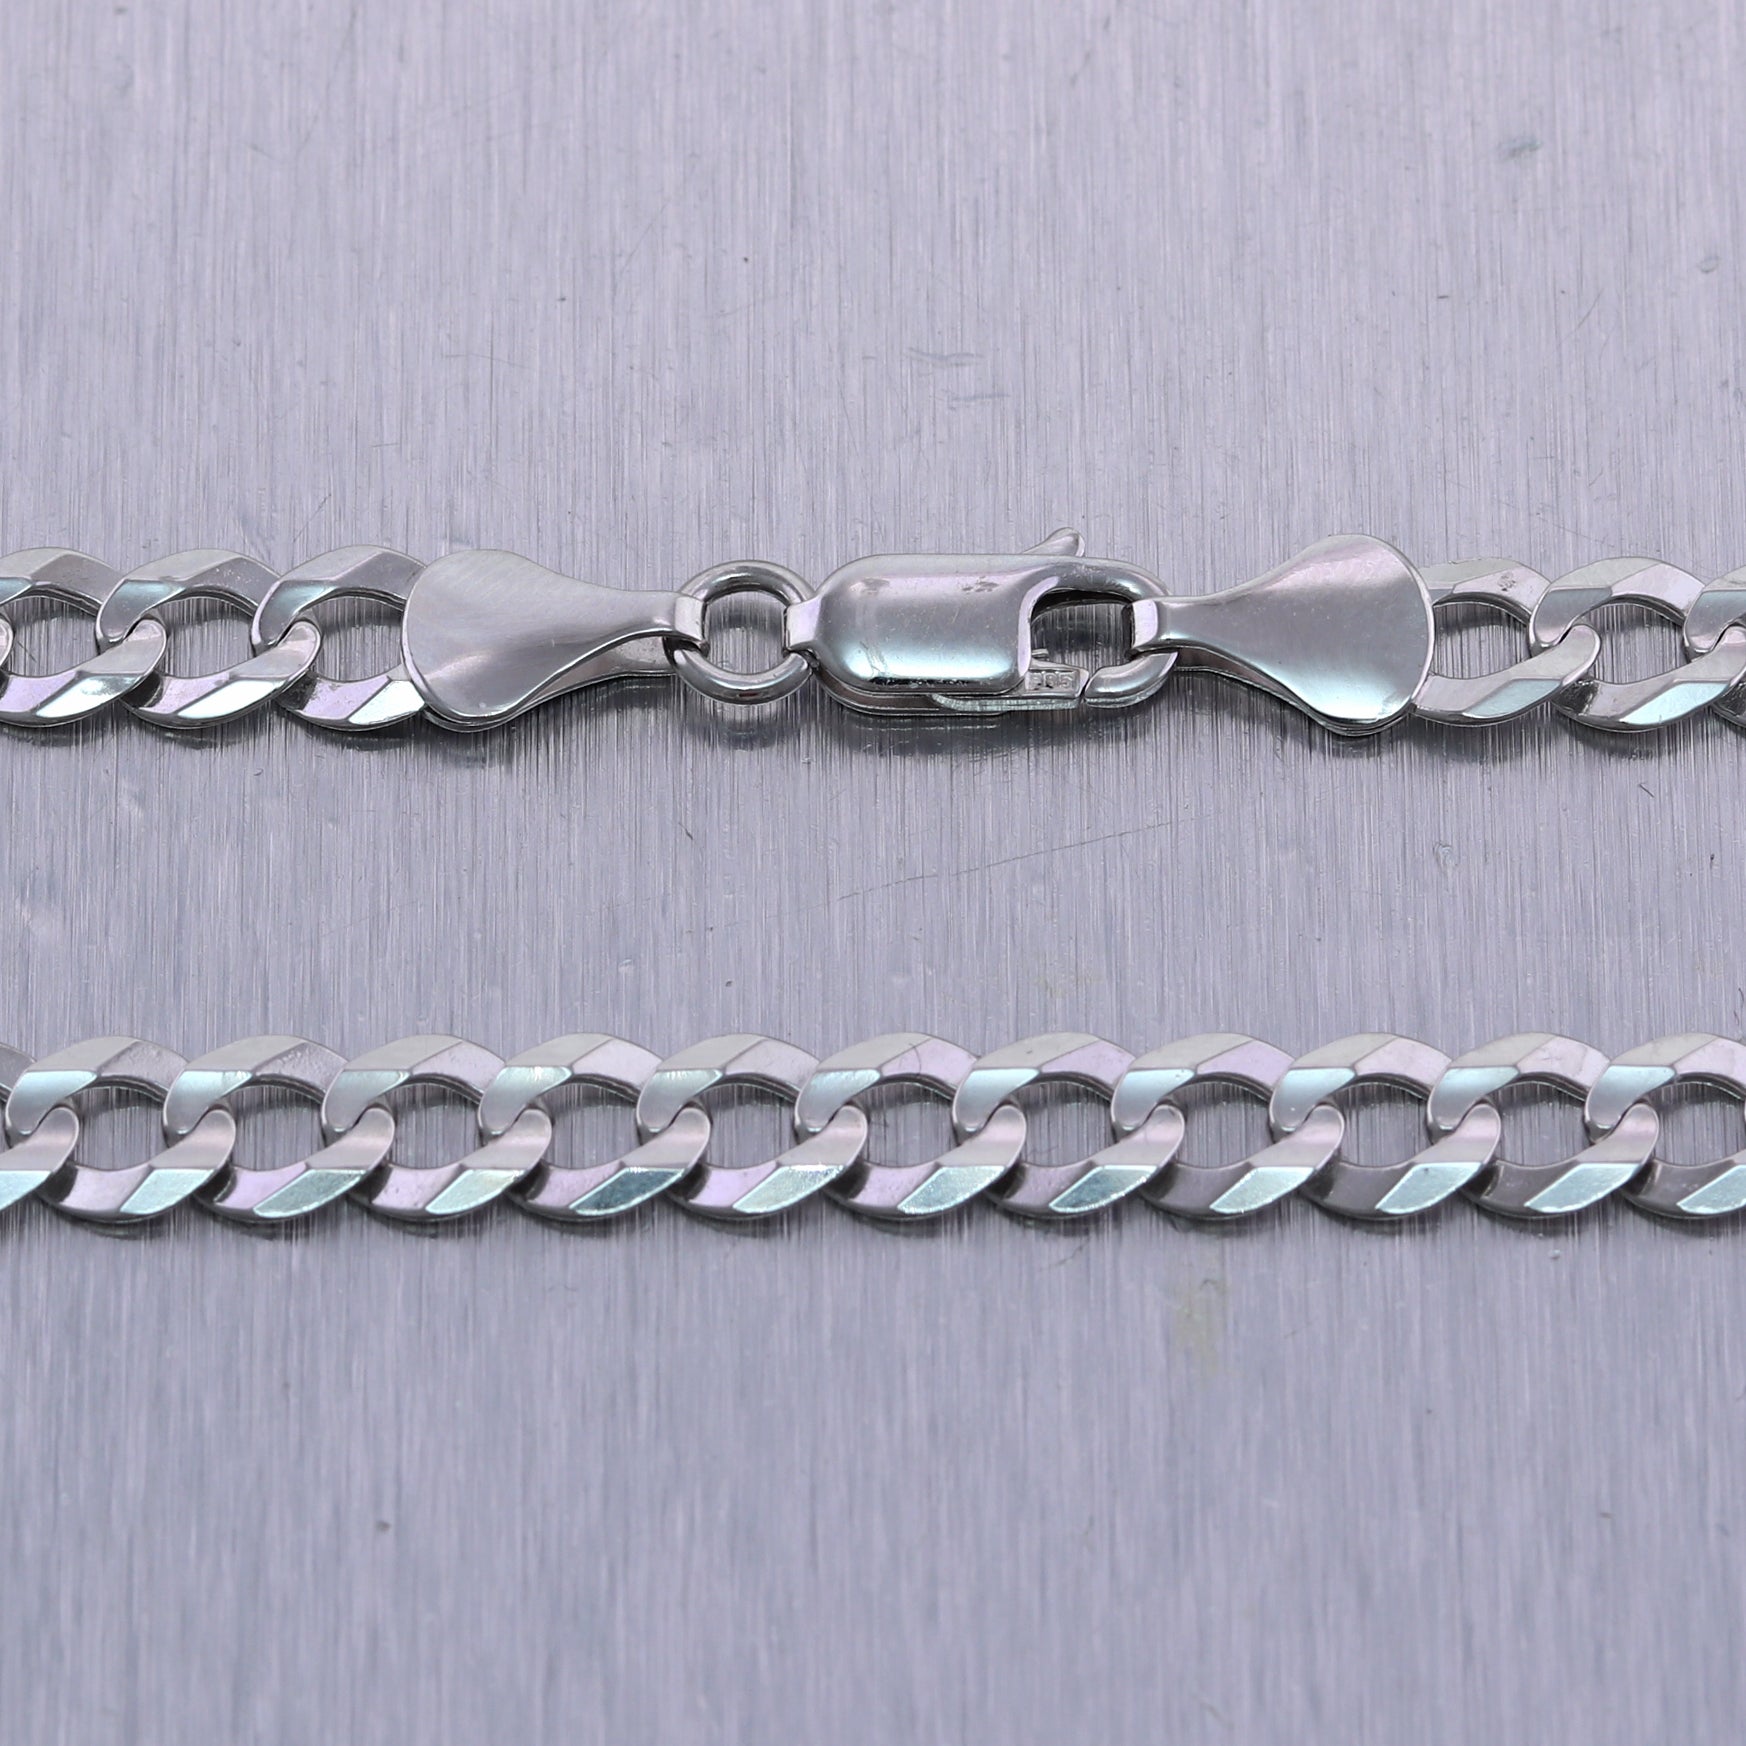 Men's 18.21g 14k White Gold Cuban Curb Link Chain 22" Necklace